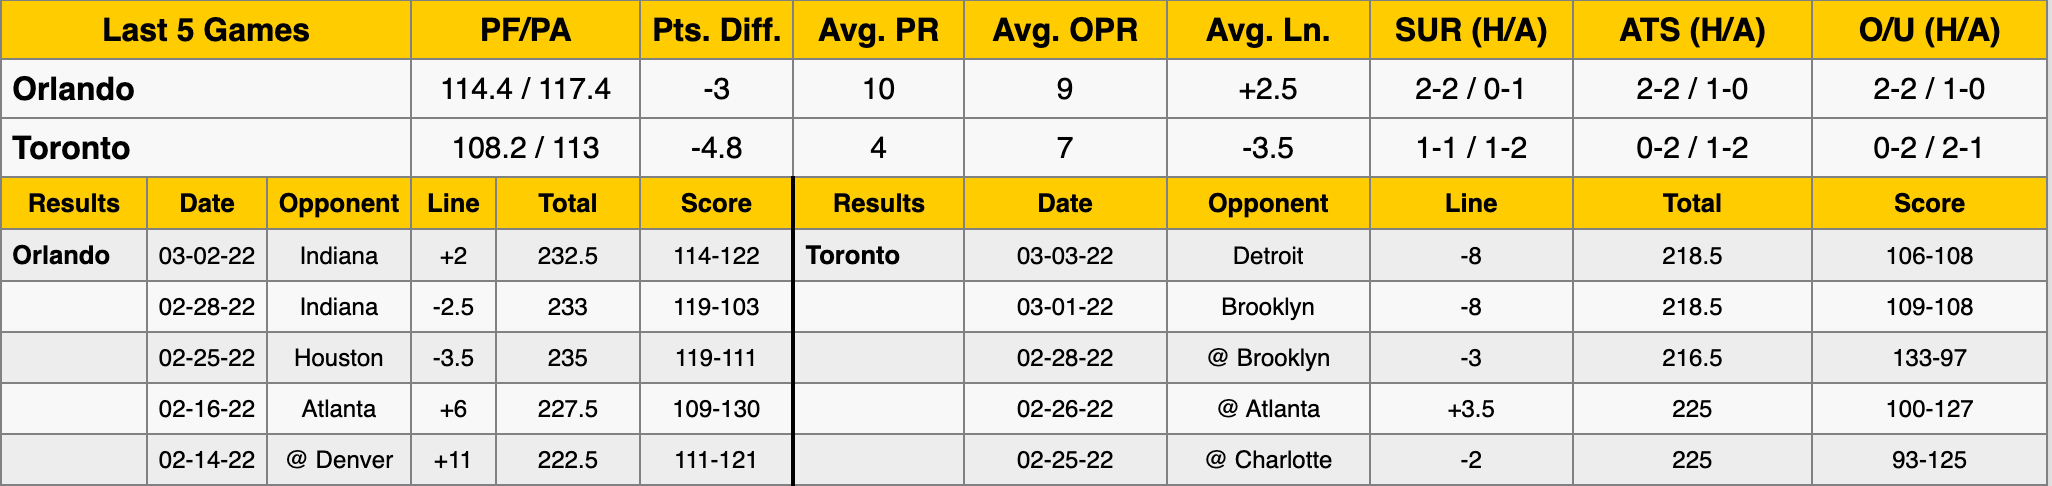 Toronto Raptors vs Orlando magic data